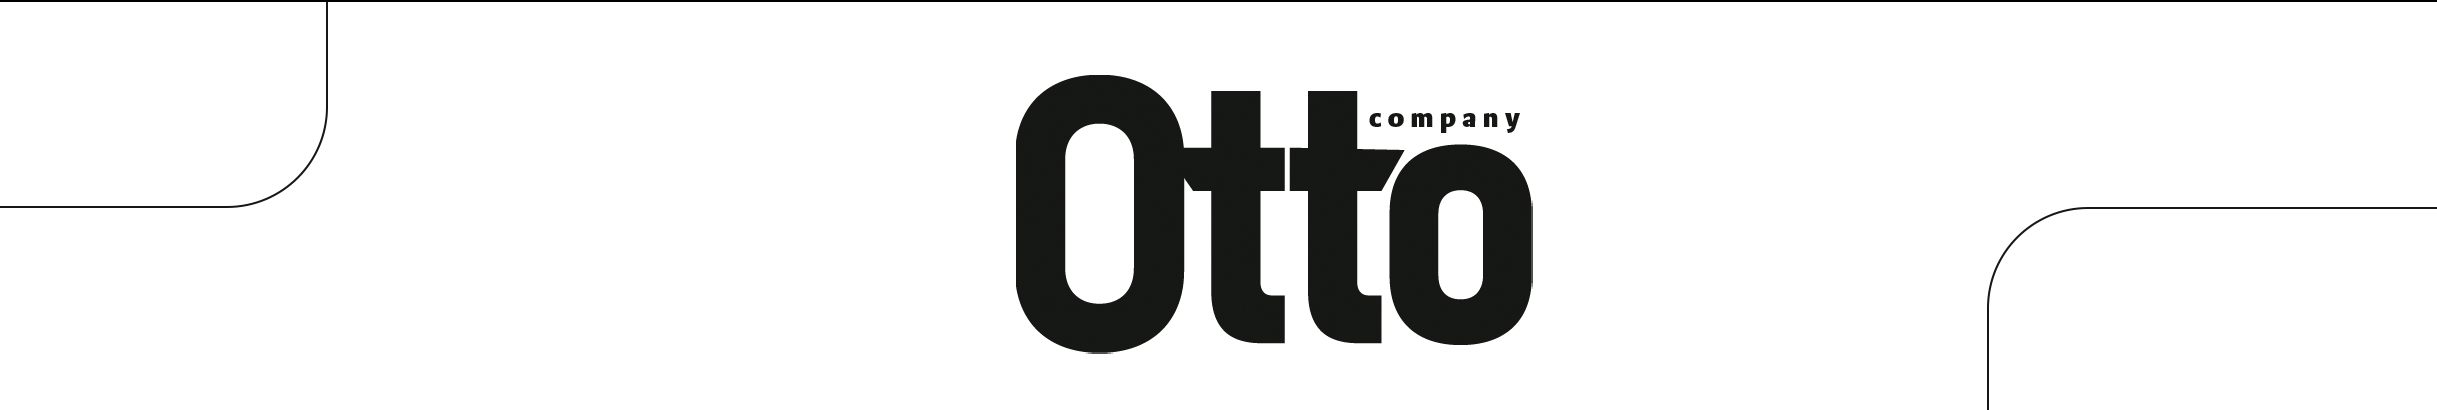 Profielbanner van Otto Company